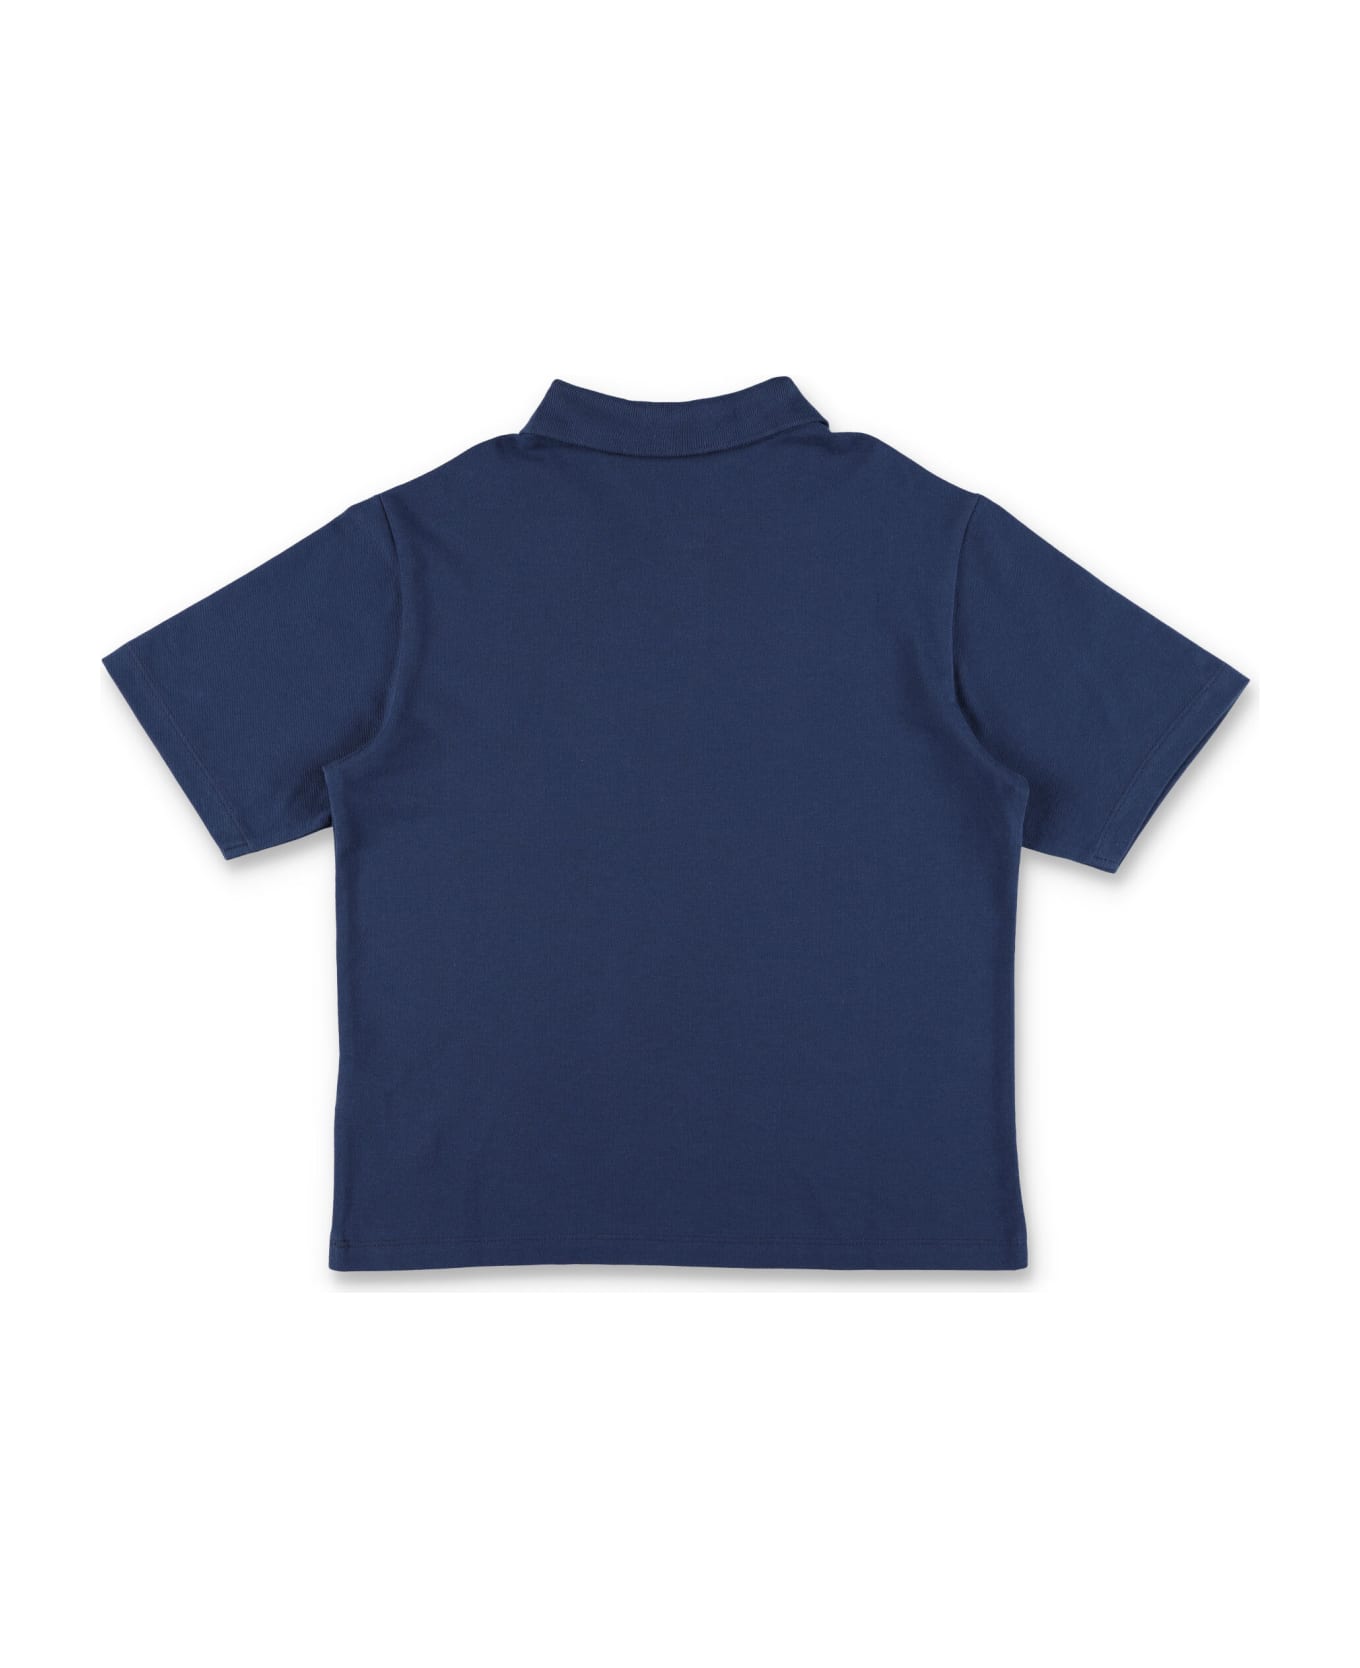 Kenzo Kids Logo Polo Shirt - NAVY Tシャツ＆ポロシャツ